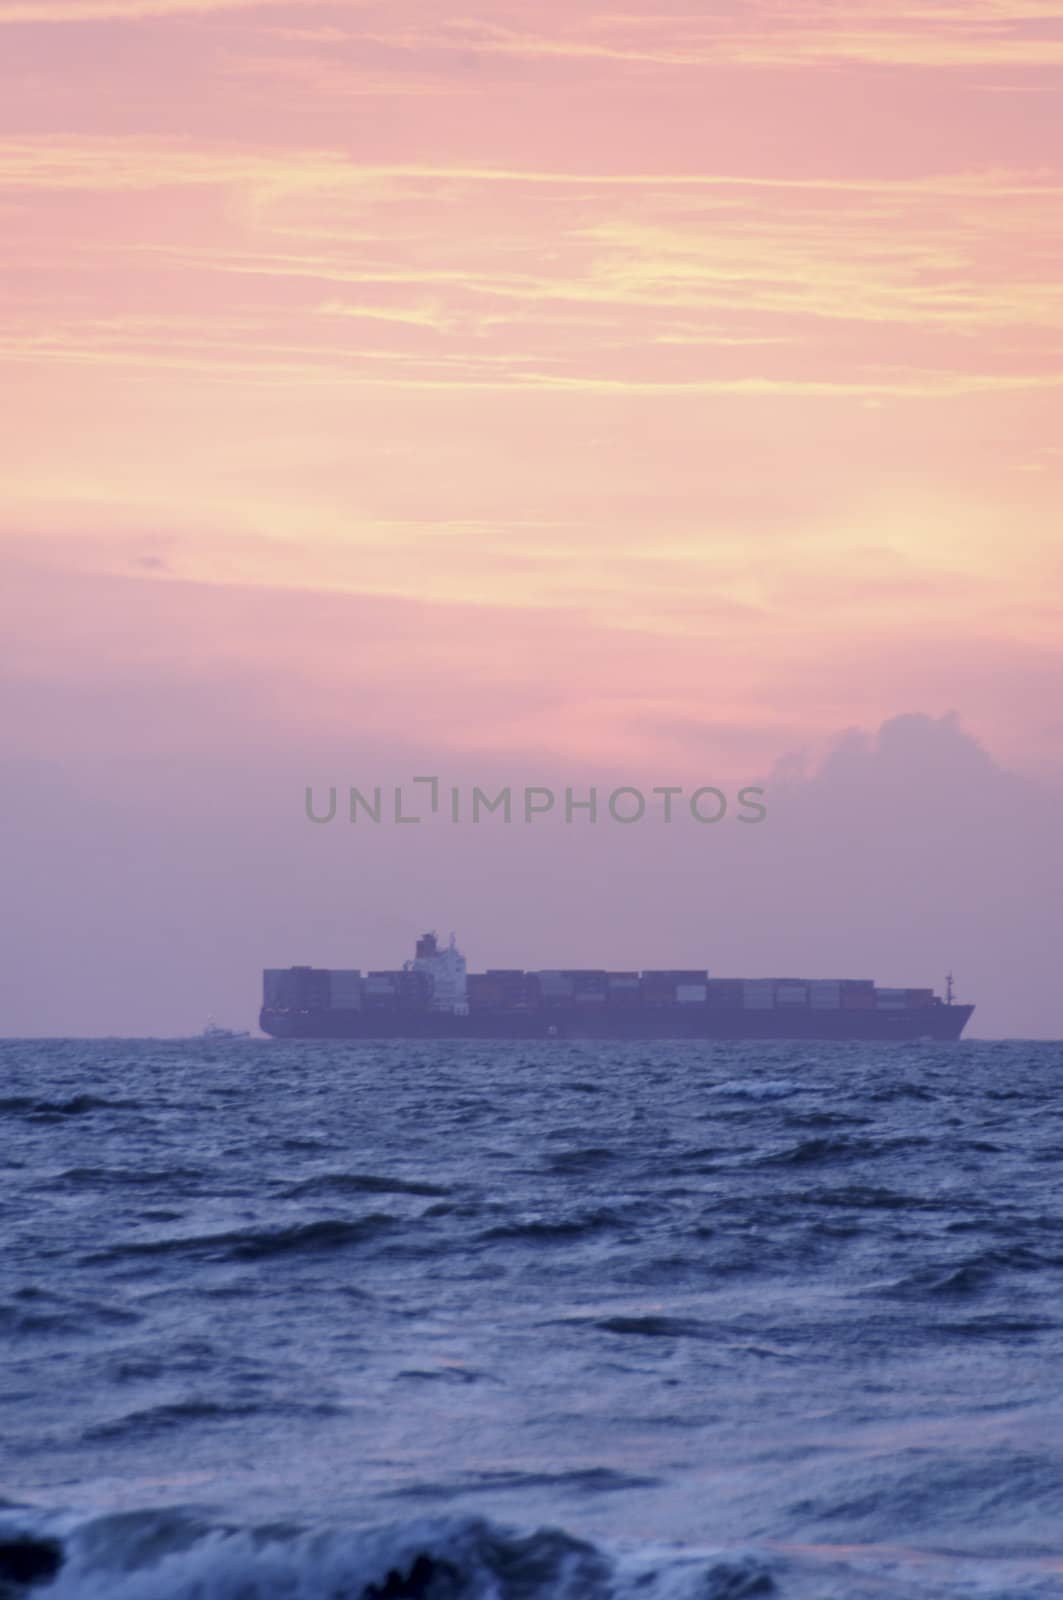 A cargo ship on the ocean at sunrise.